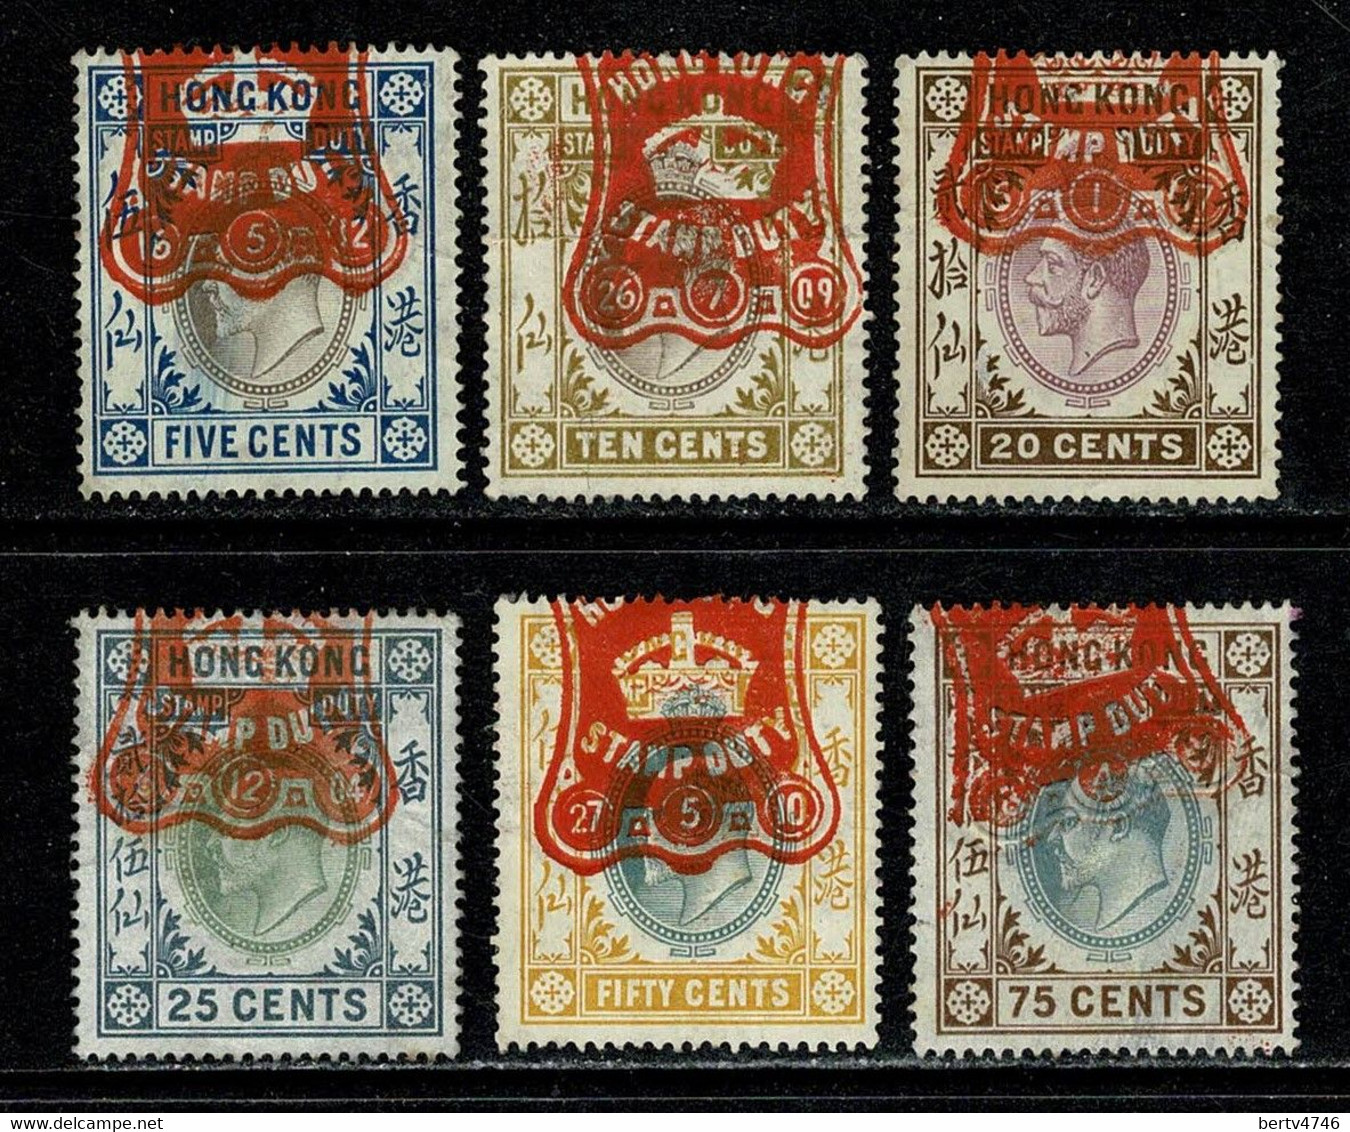 Hong Kong Stamp Duty Used Edward VII 5, 10, 20, 25, 50, 75 Cents - Francobollo Fiscali Postali